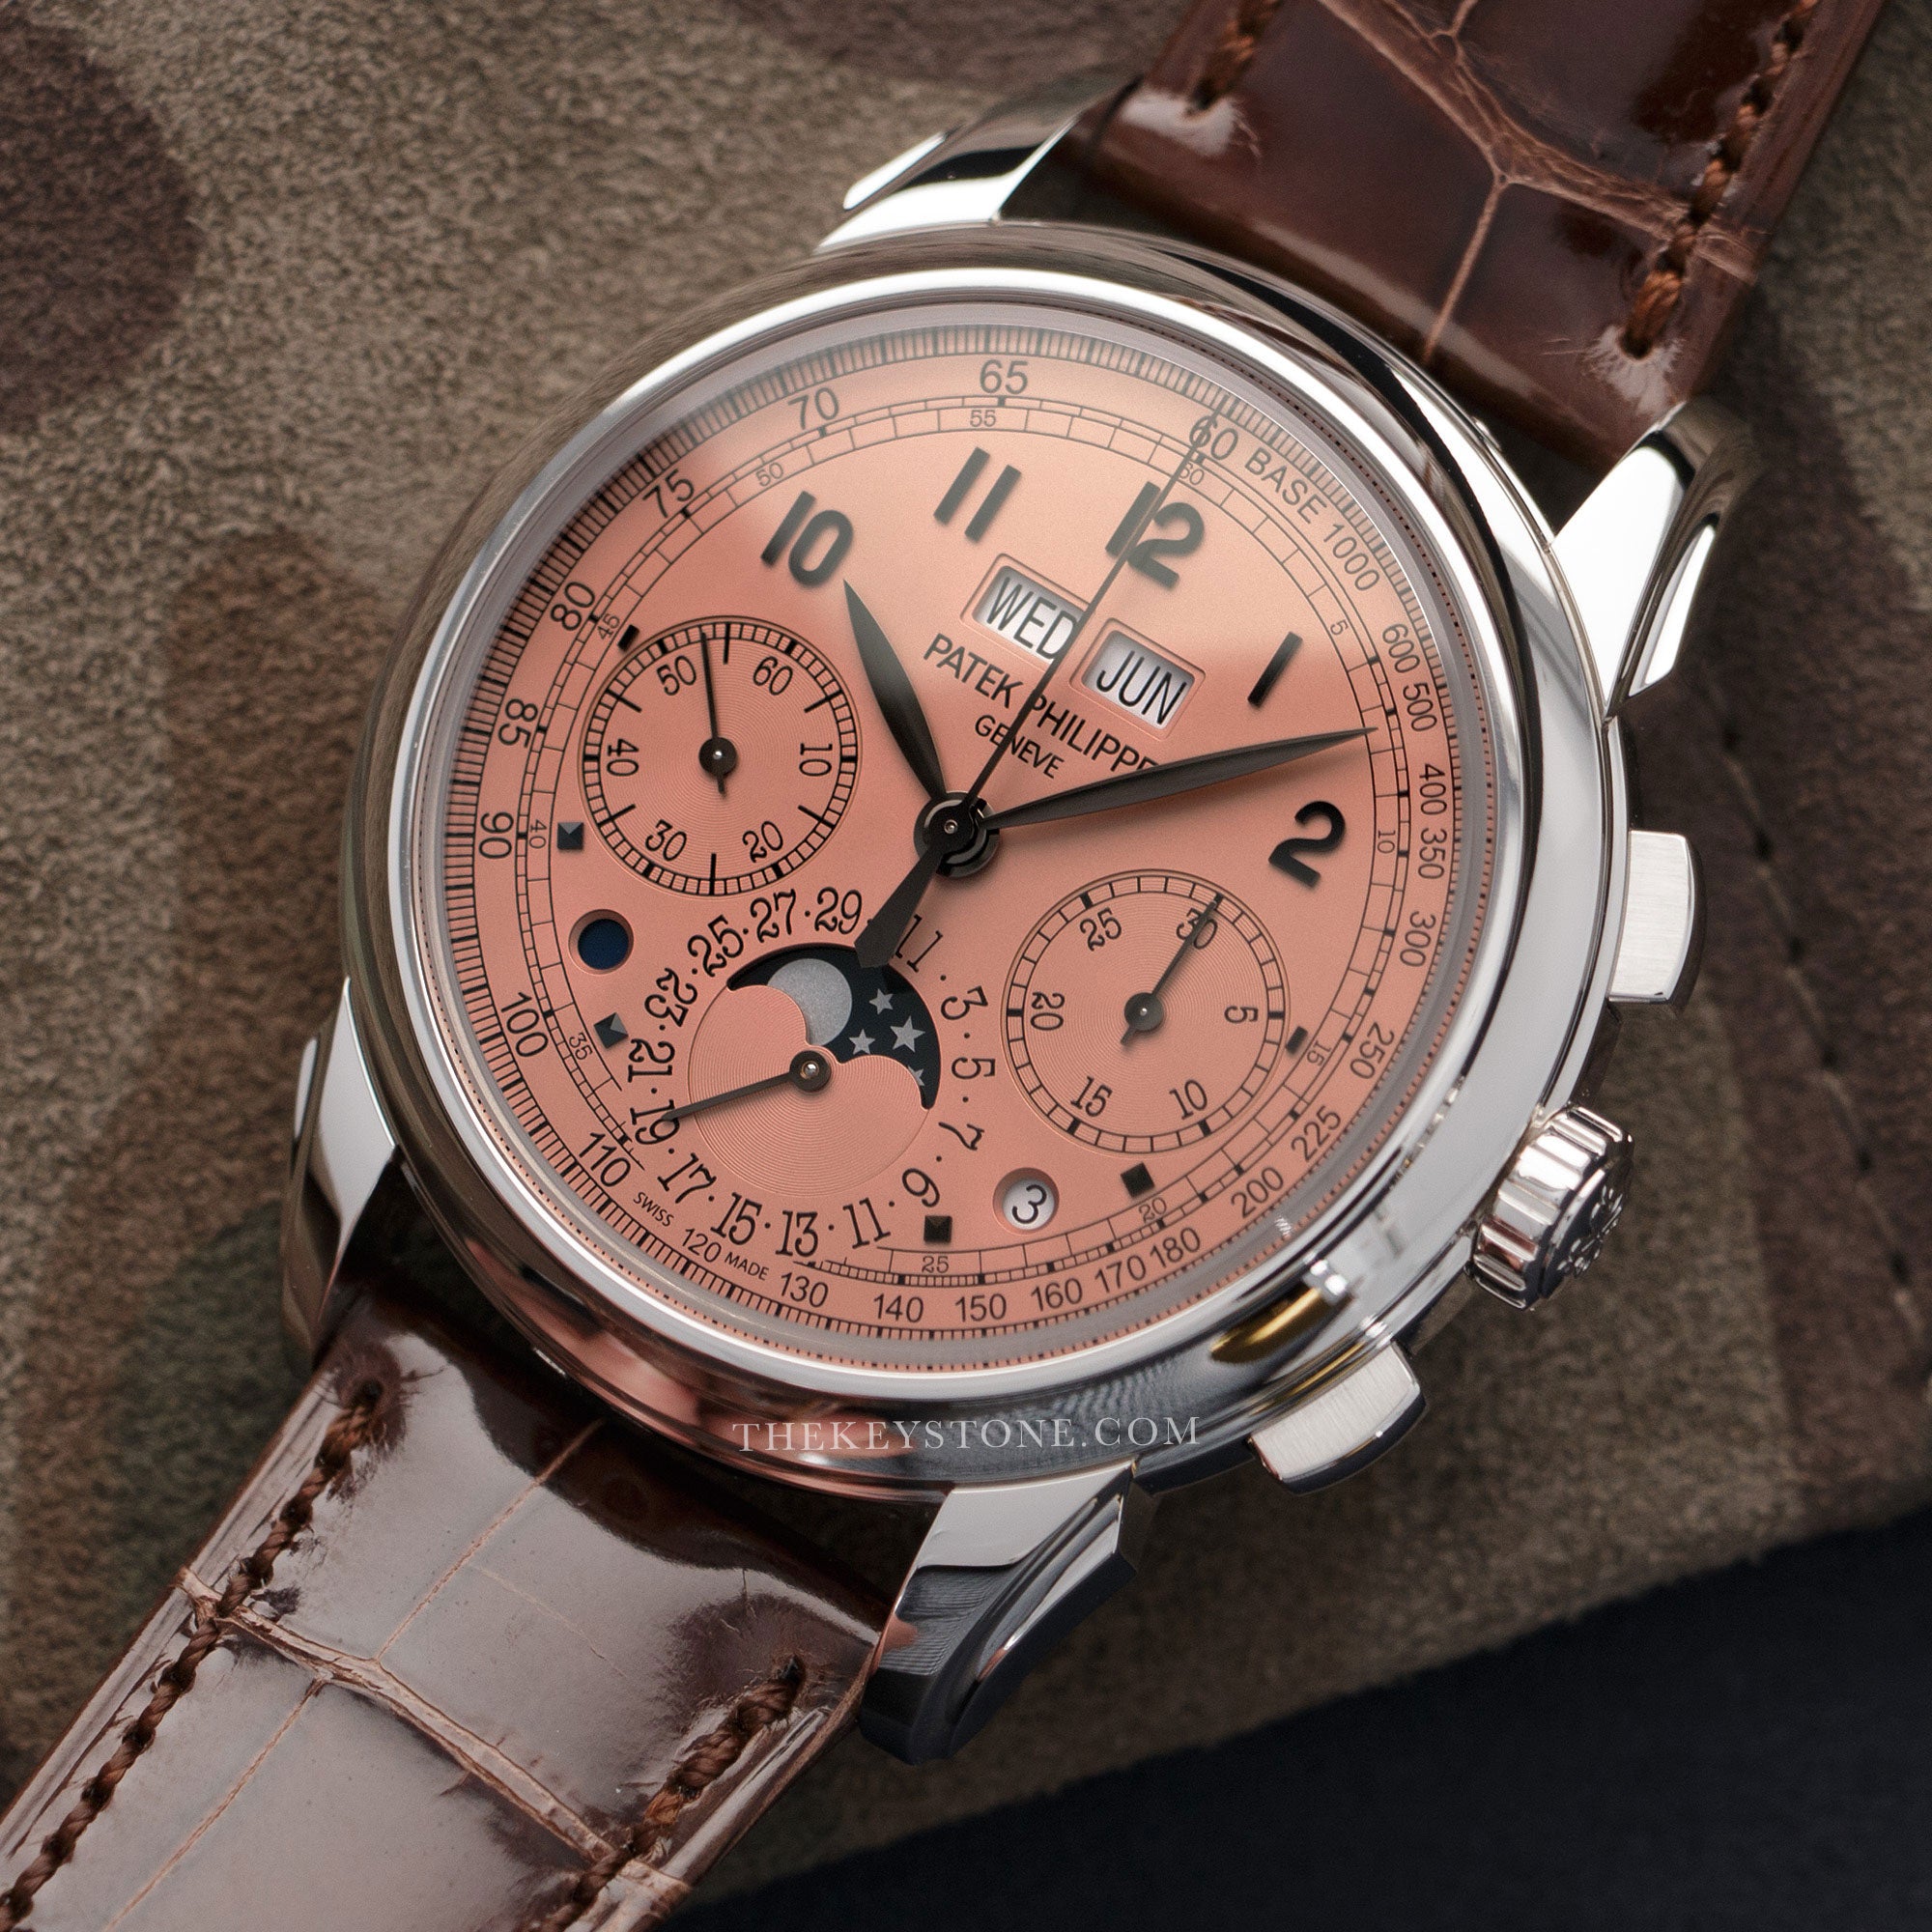 Patek Philippe - Patek Philippe Platinum Perpetual Calendar Chronograph Watch Ref. 5270 - The Keystone Watches